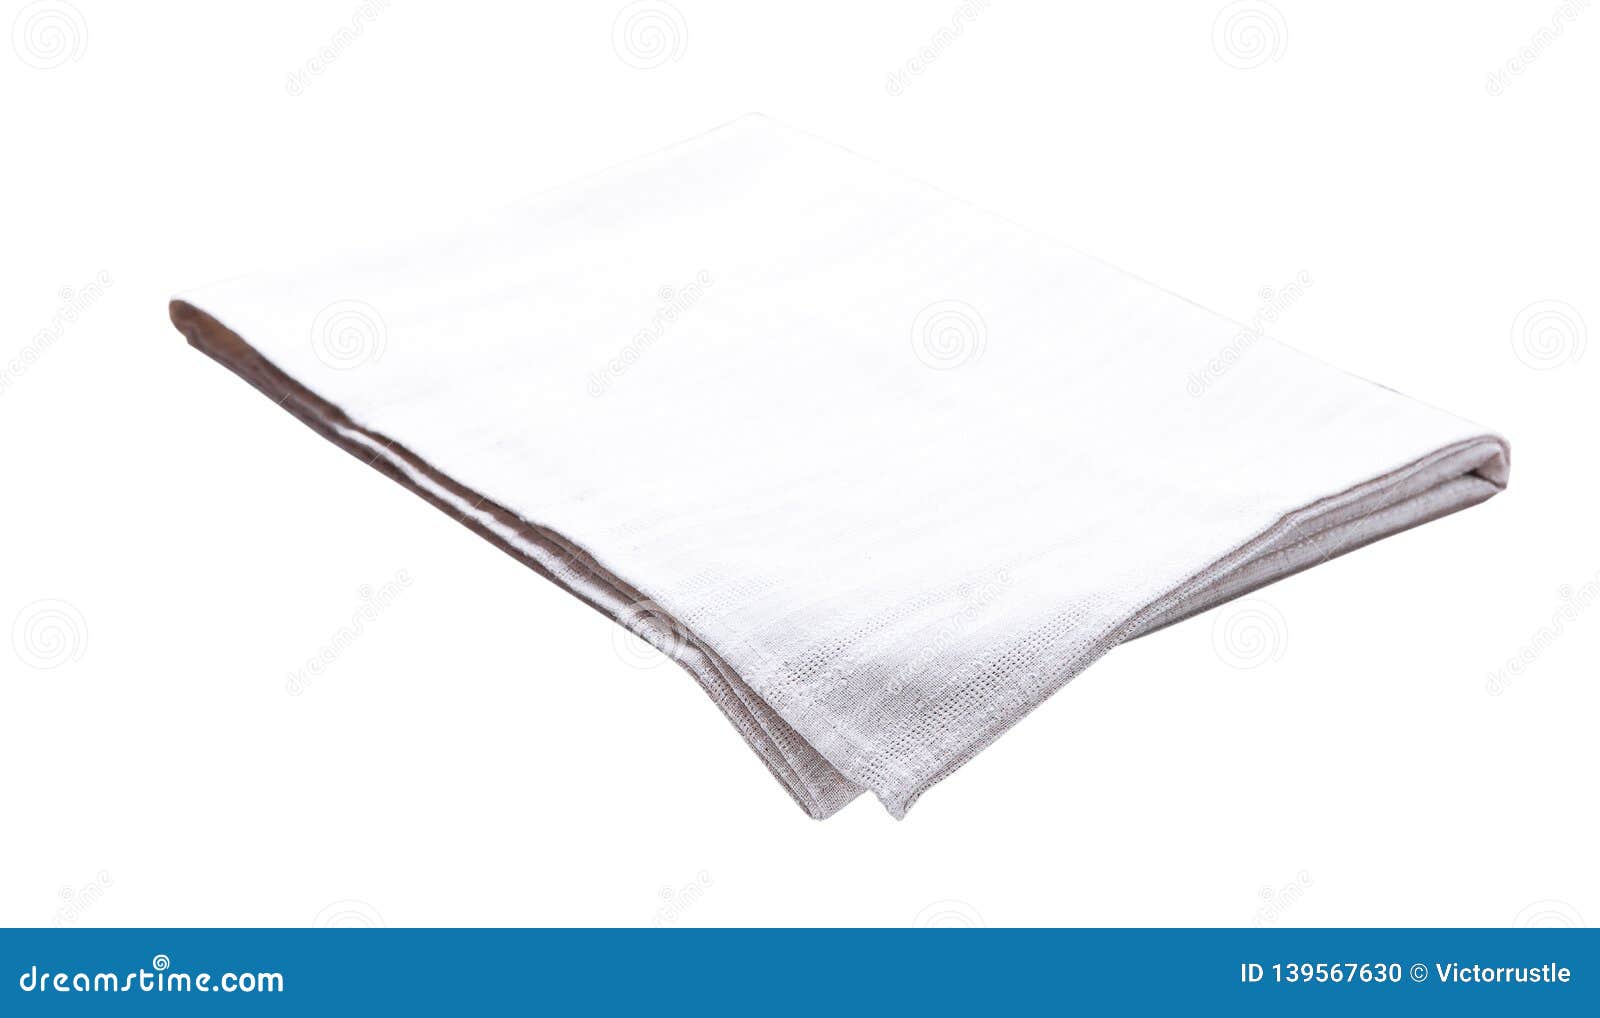 kitchen towel bar images lowes